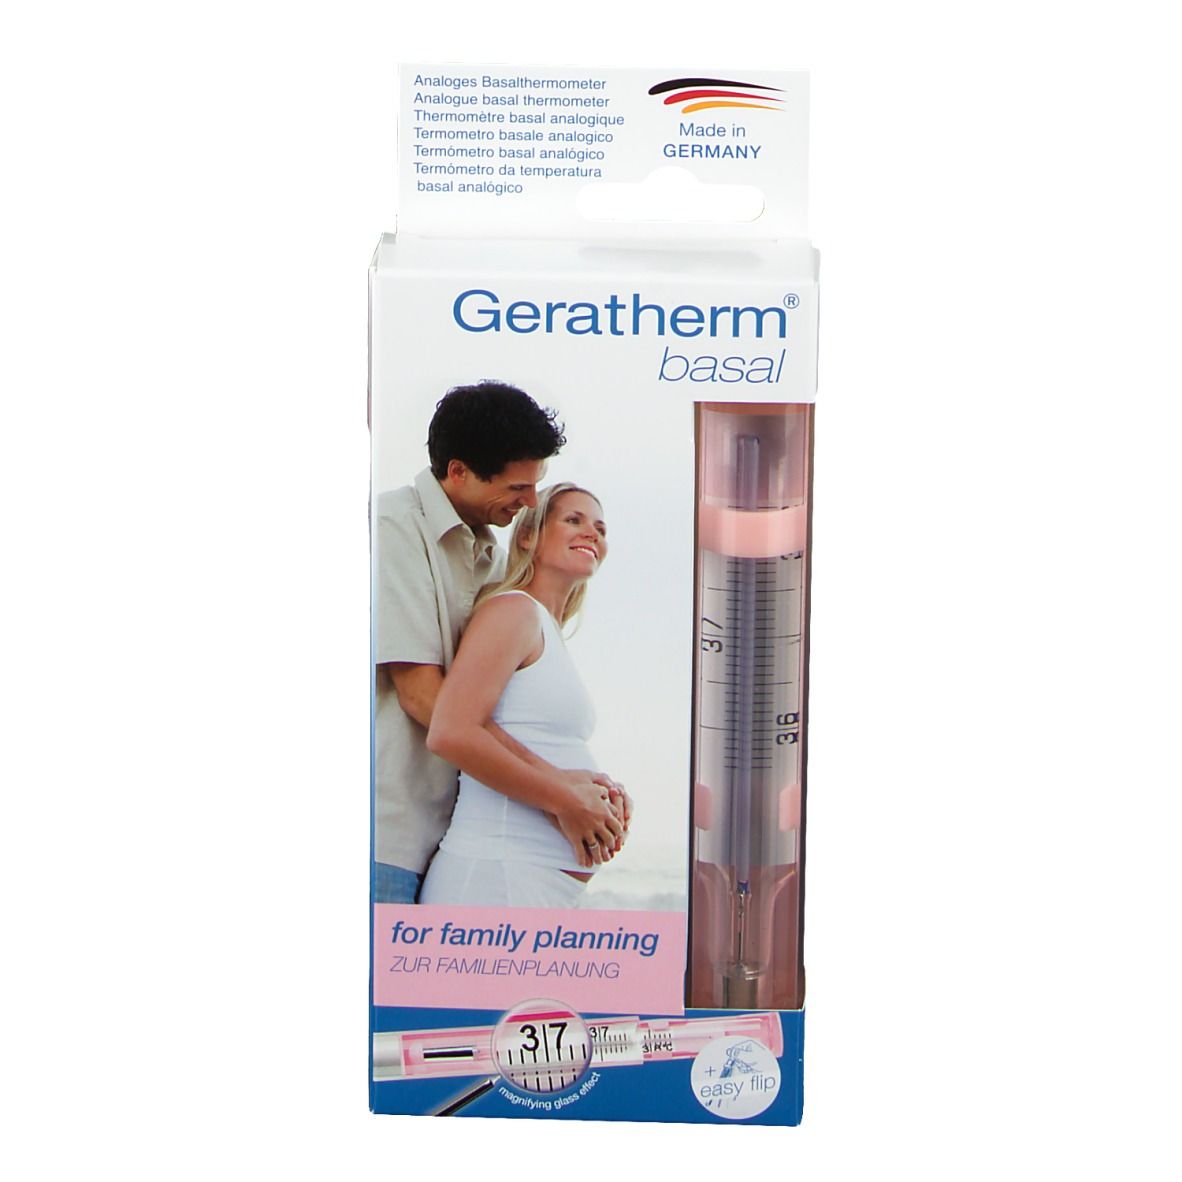 Geratherm® basal